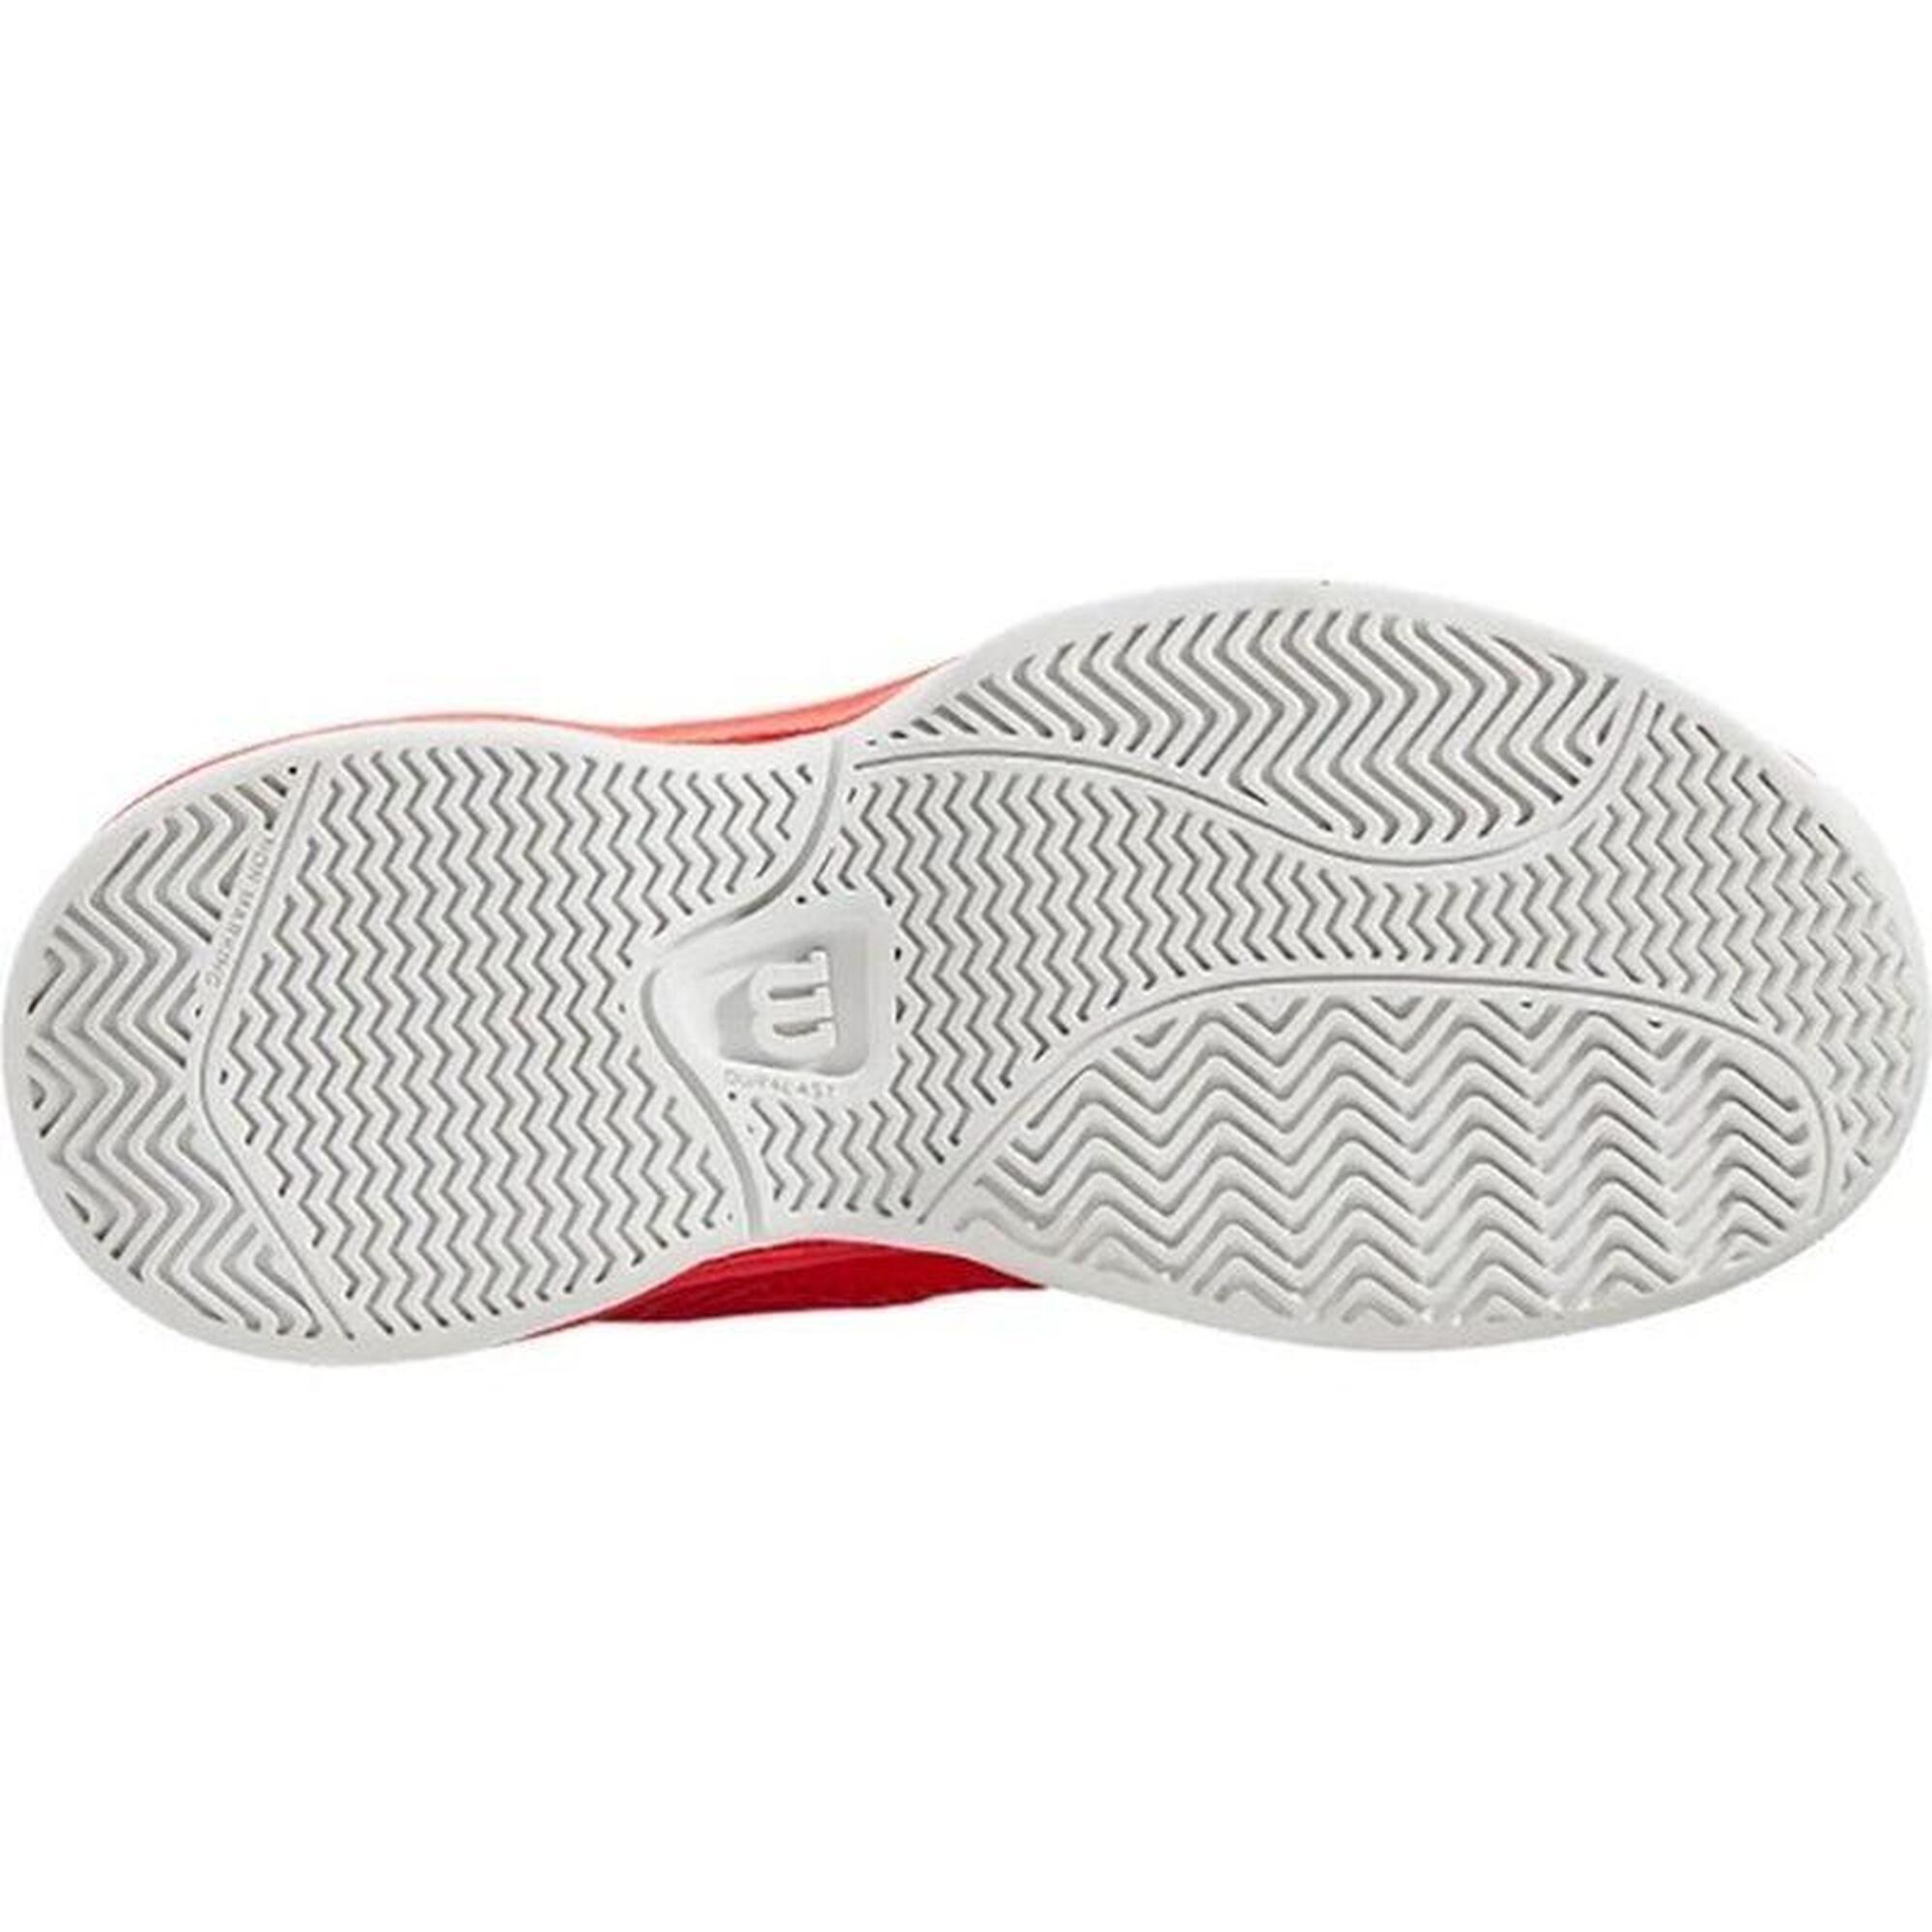 Buty tenisowe dziecięce Wilson Kaos Emo infrared/tropical peach/white 32 1/3